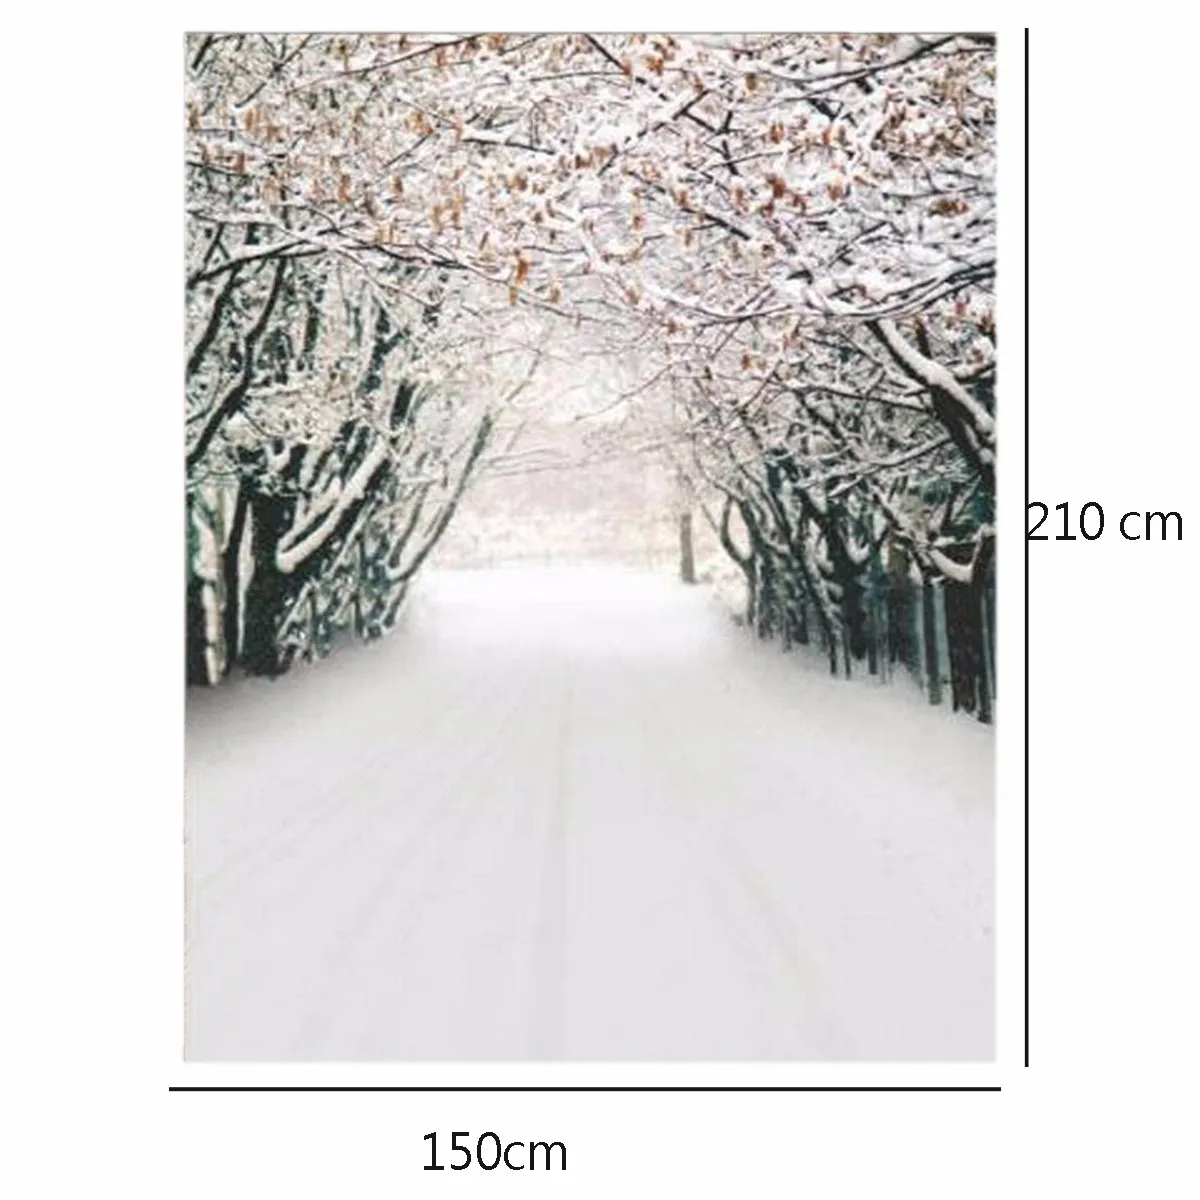 Freya 7x5FT покрытый снегом лес фон для студийной фотосъемки вечерние фото-съемки пол сзади капли Фотофон комплект 2,1x1,5 м - Цвет: Королевский синий